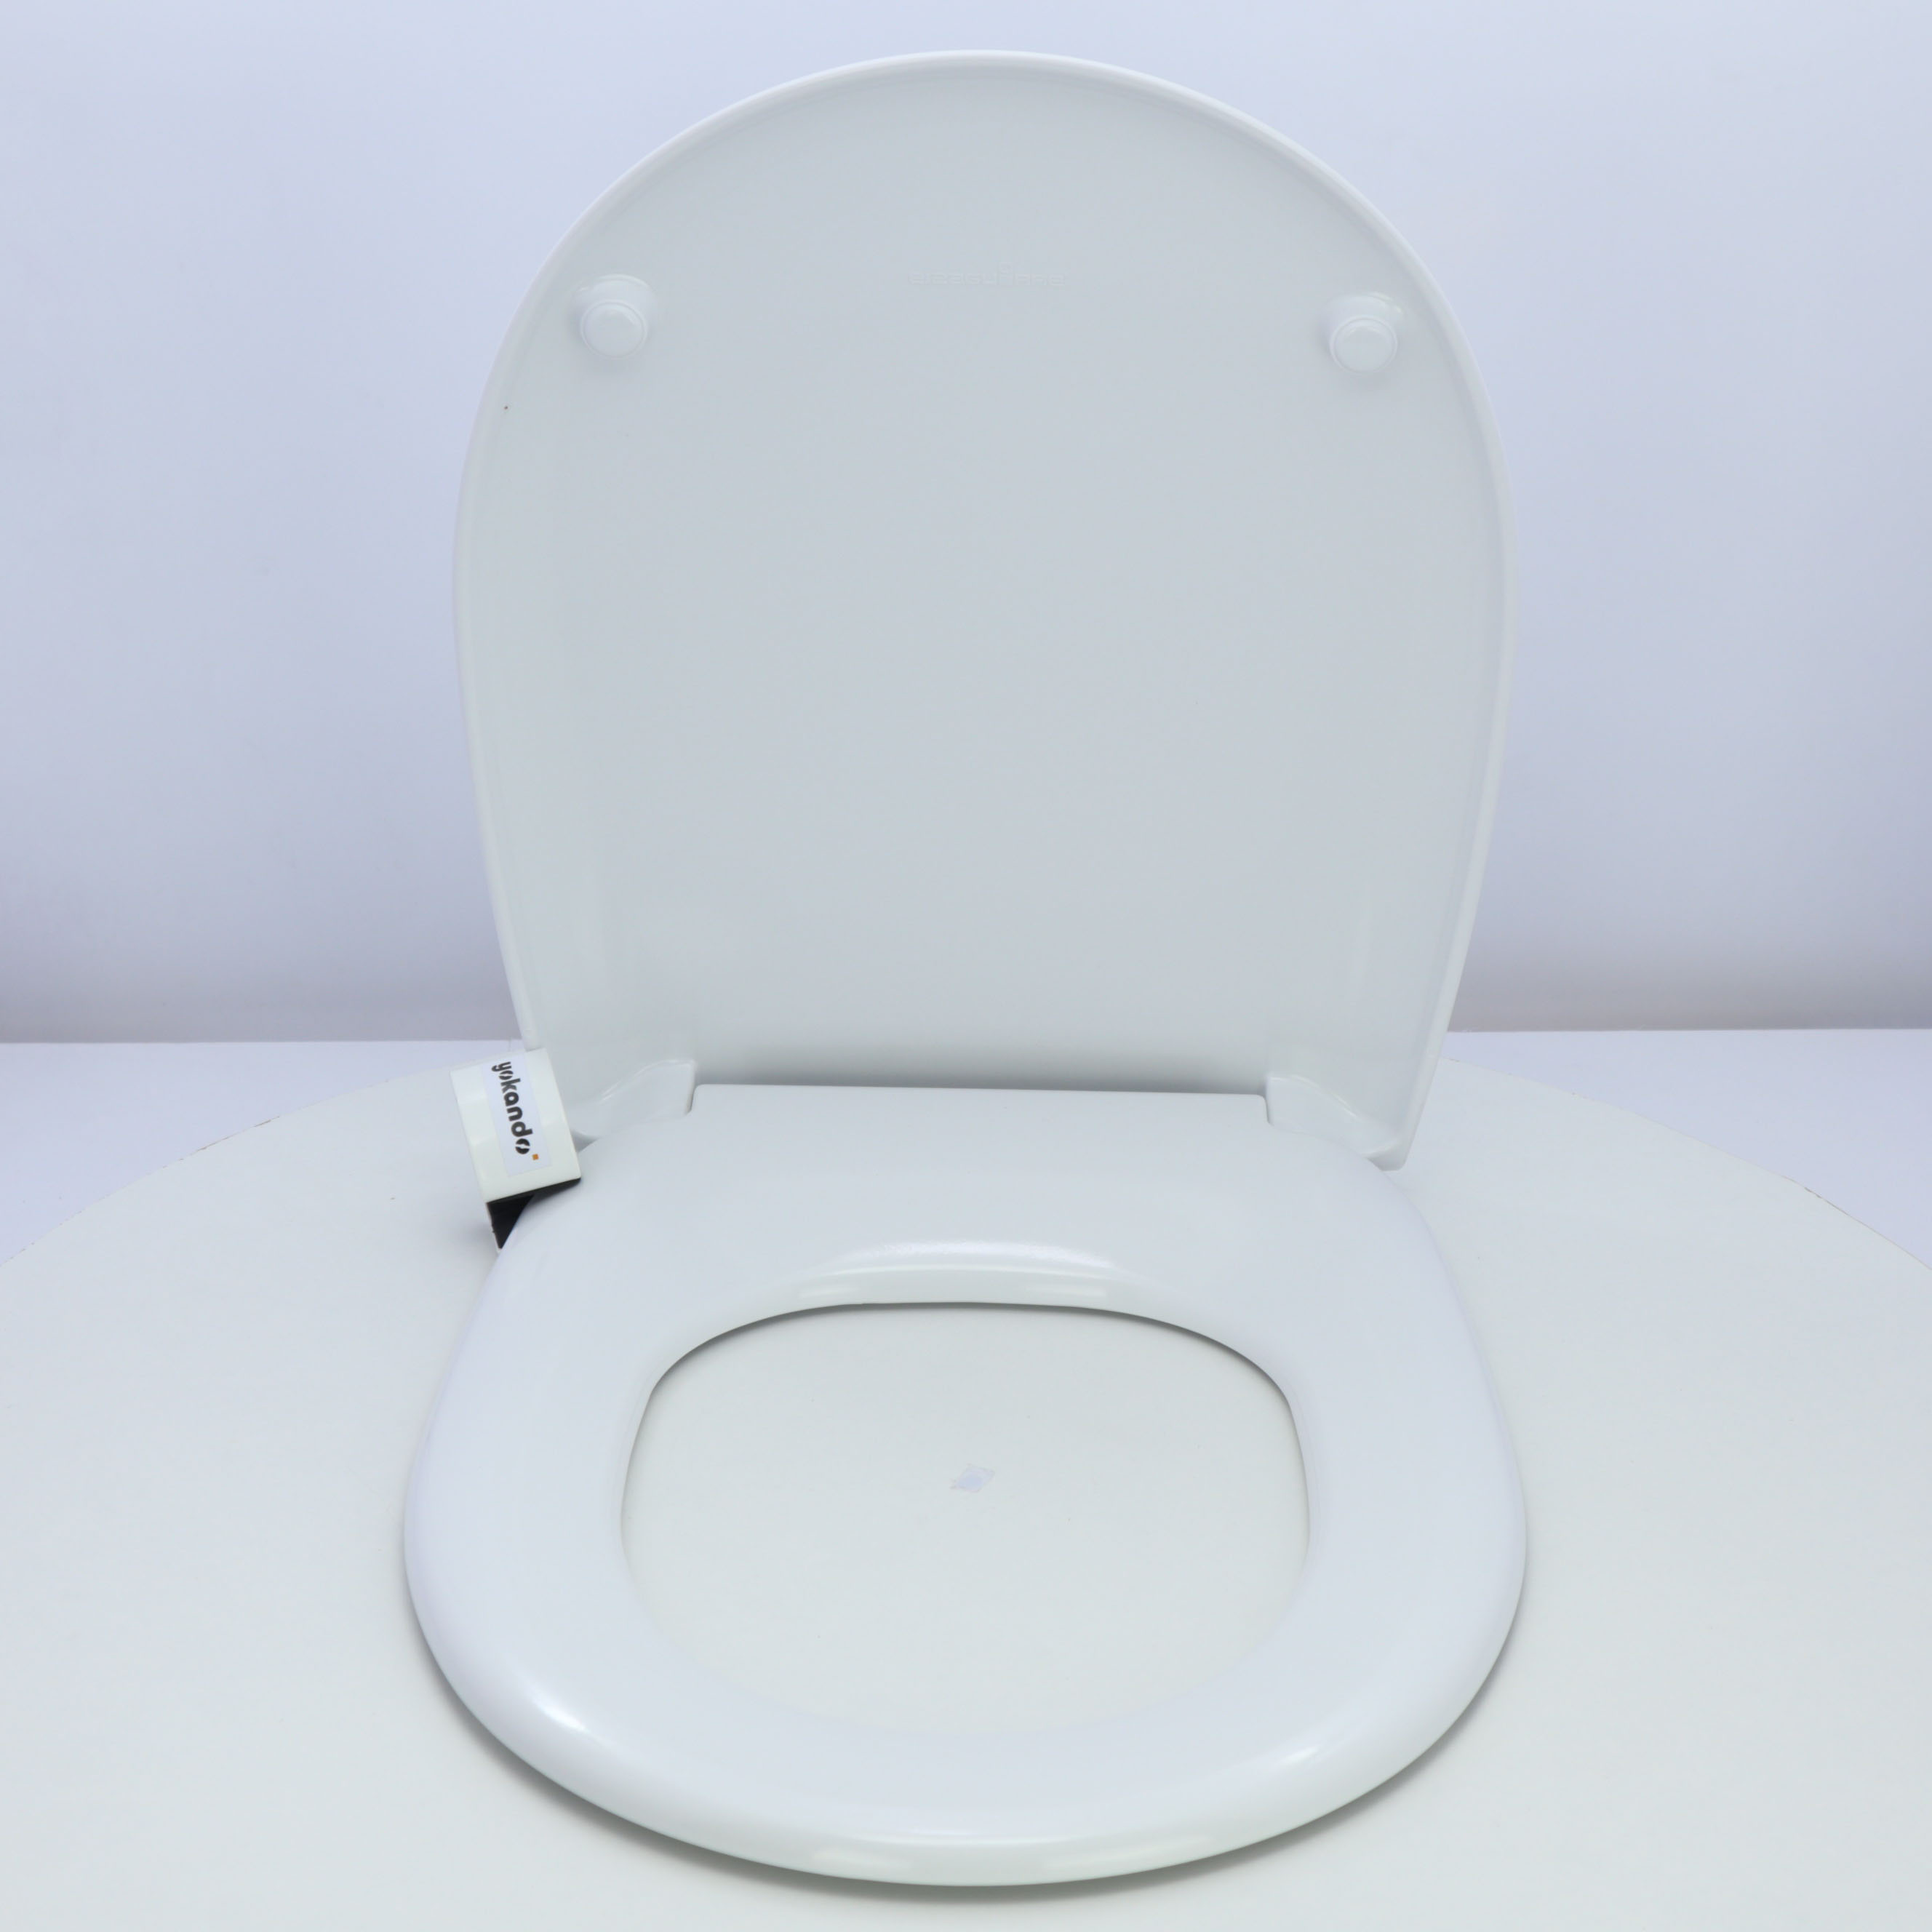 Toilet Seat Roca Victoria adaptable in Duroplast